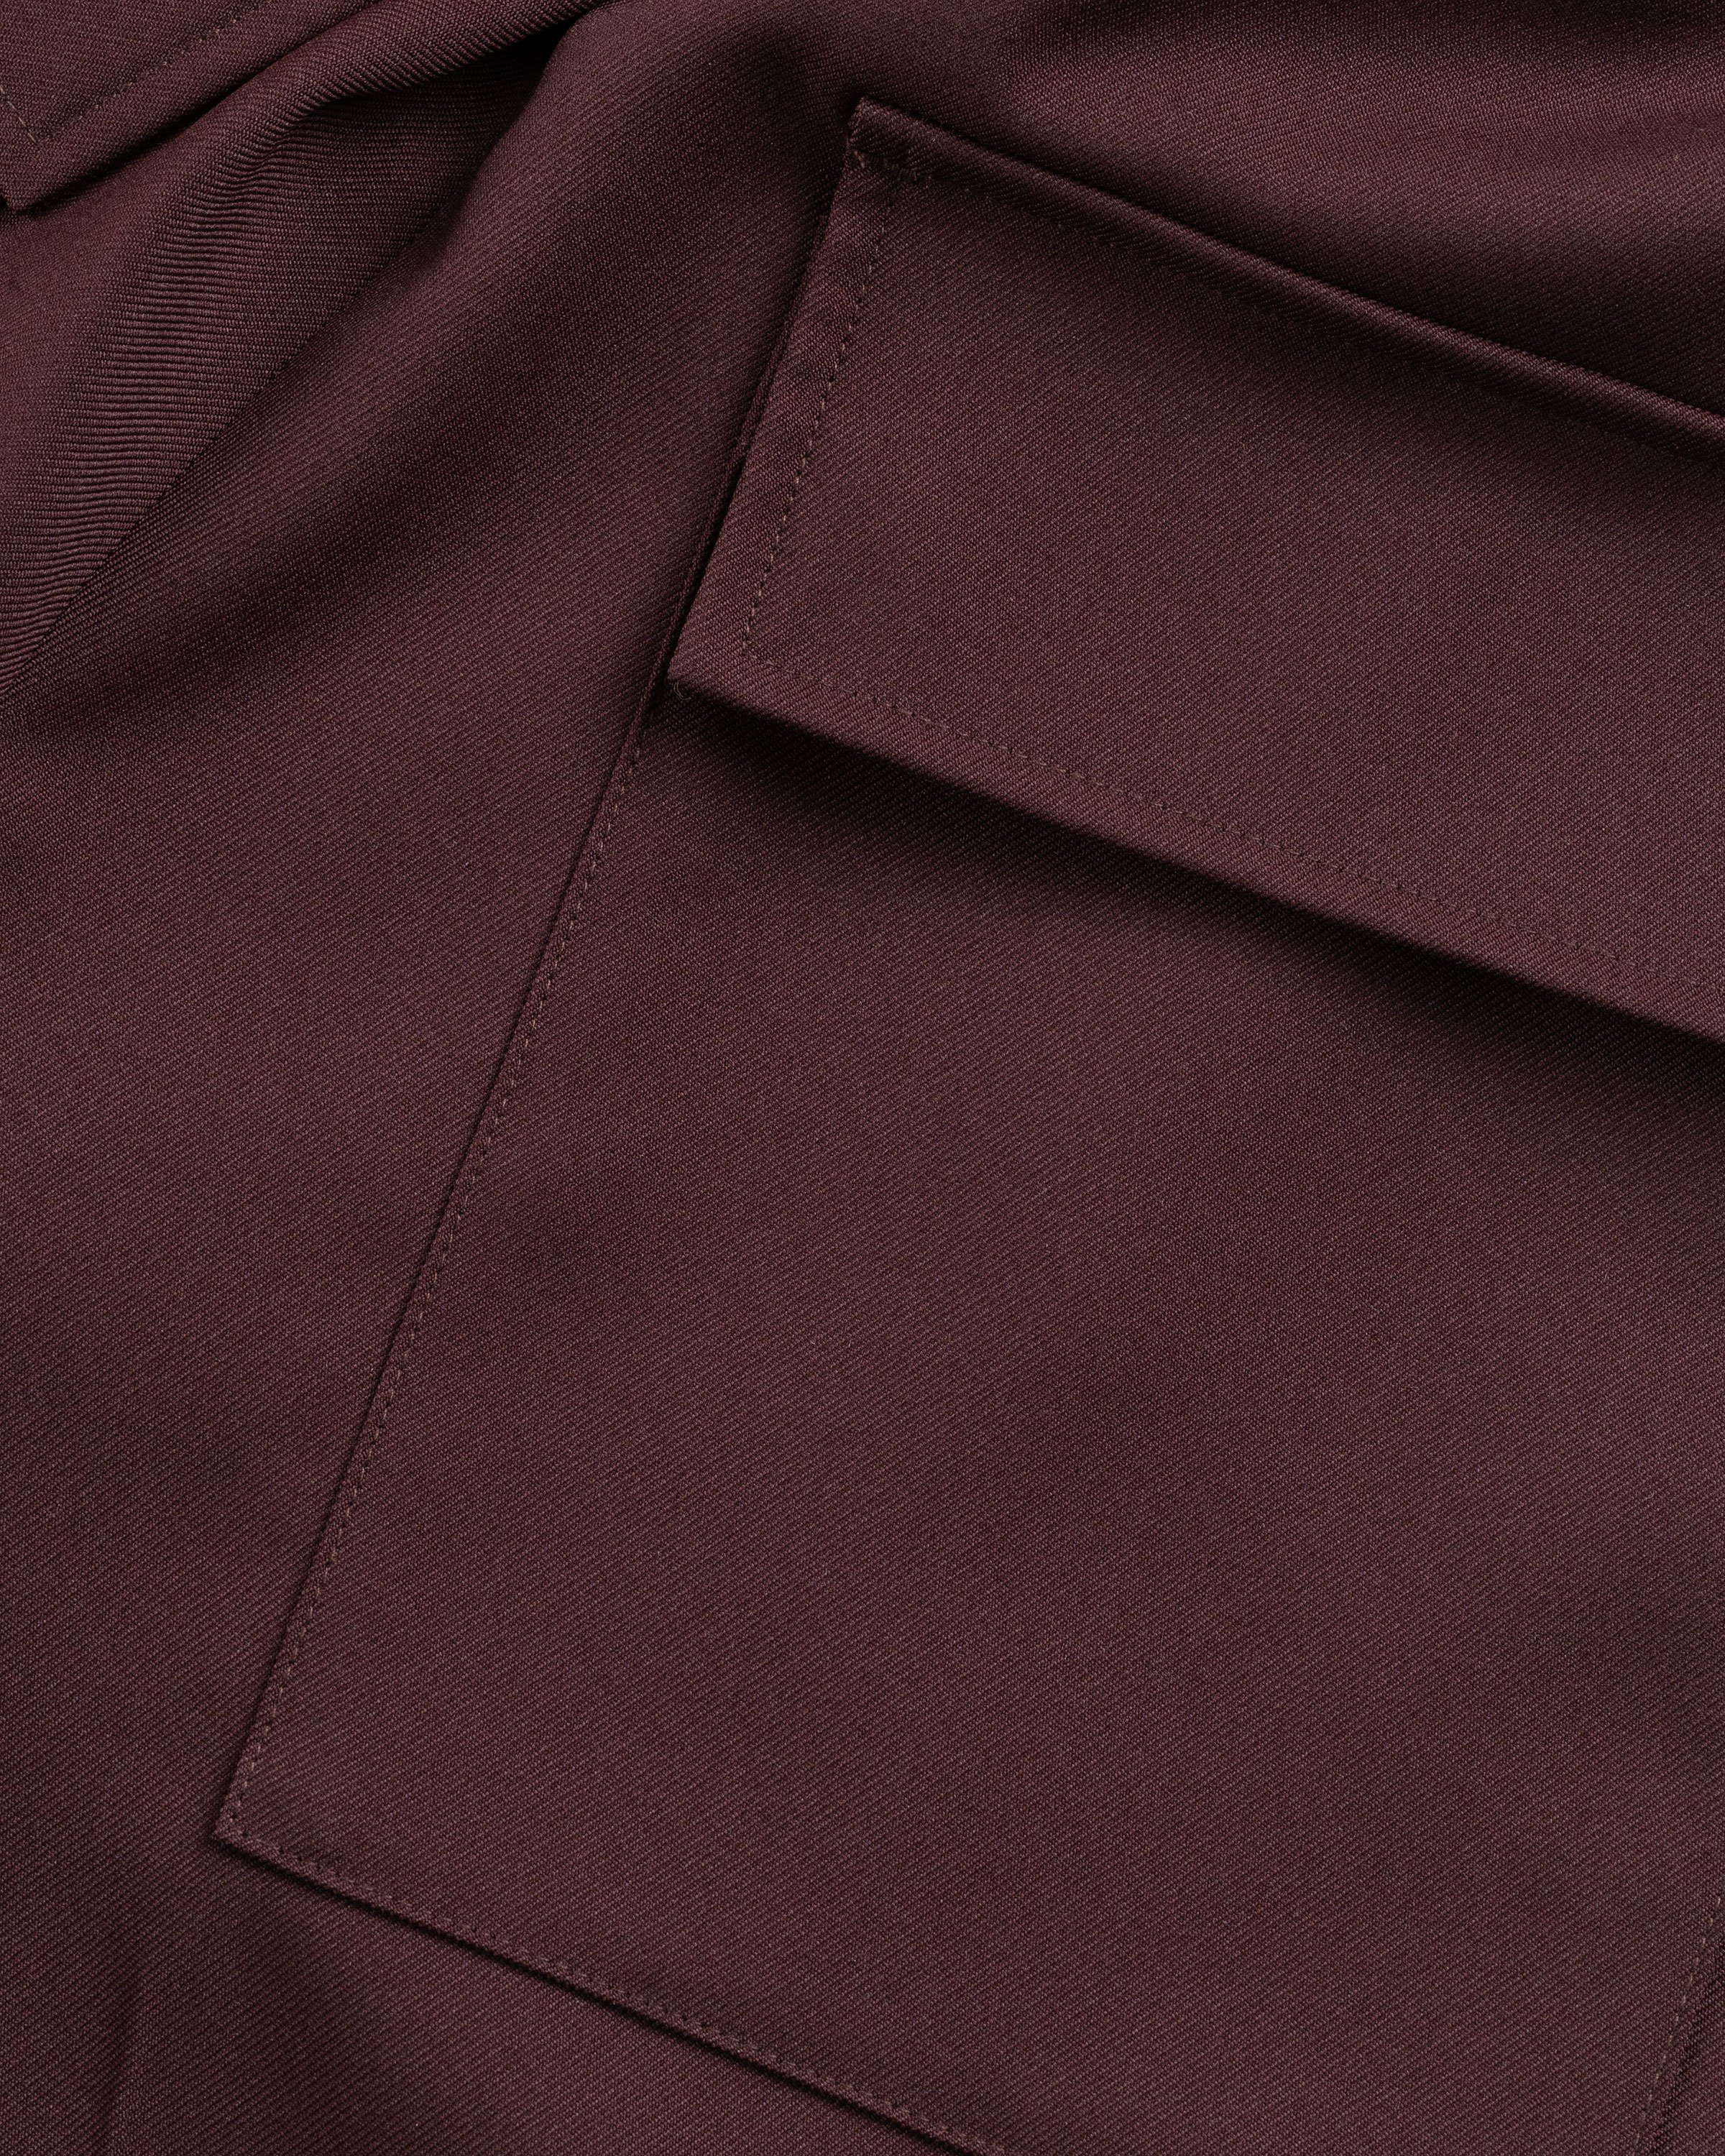 Jil Sander - Trouser D 09 AW 20 Mahogany - Clothing - Brown - Image 5